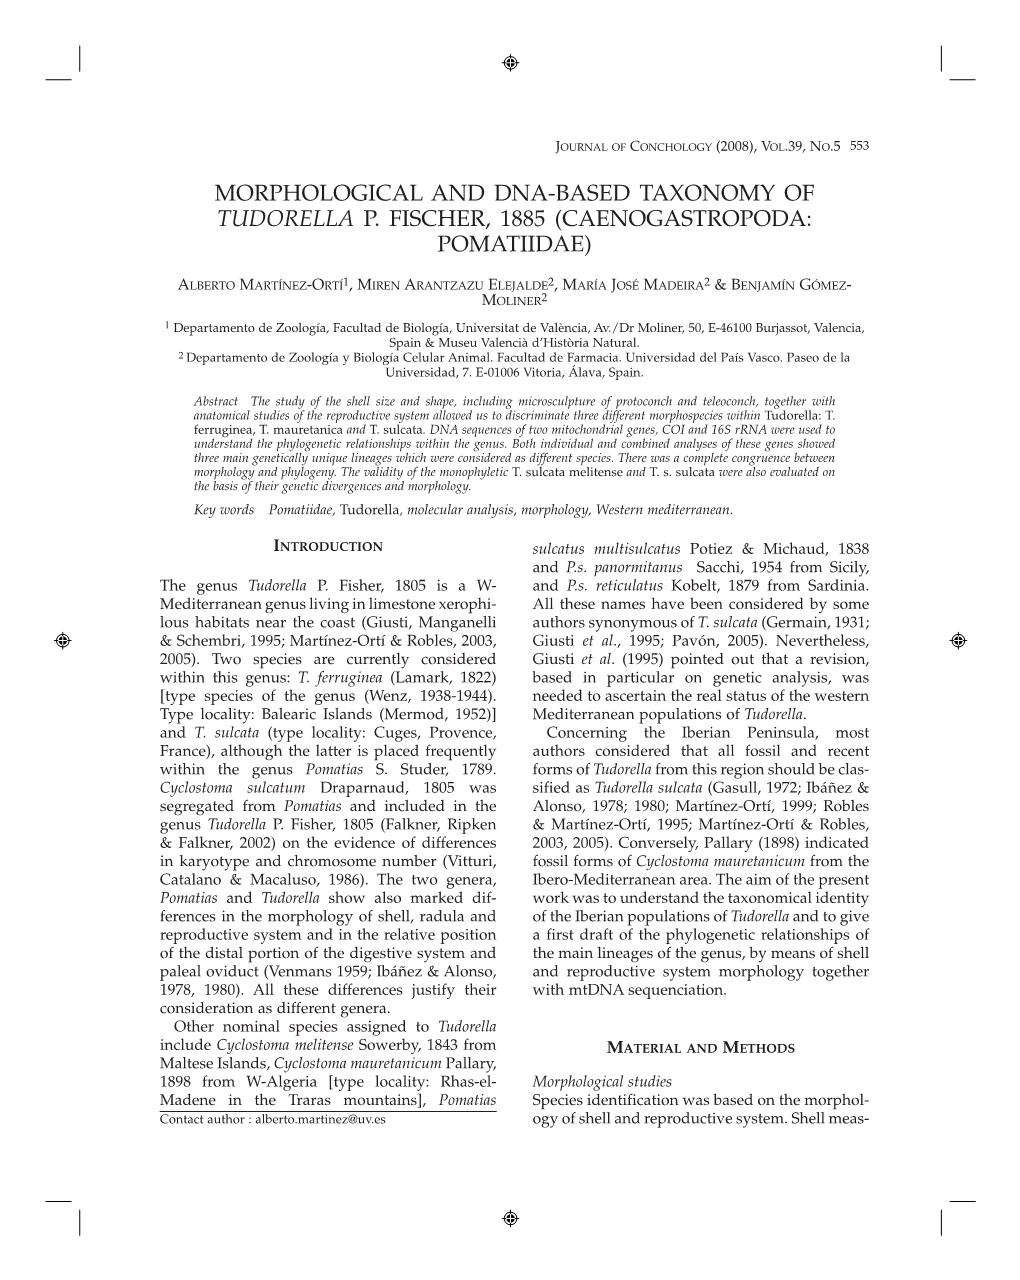 Morphological and Dna-Based Taxonomy of Tudorella P